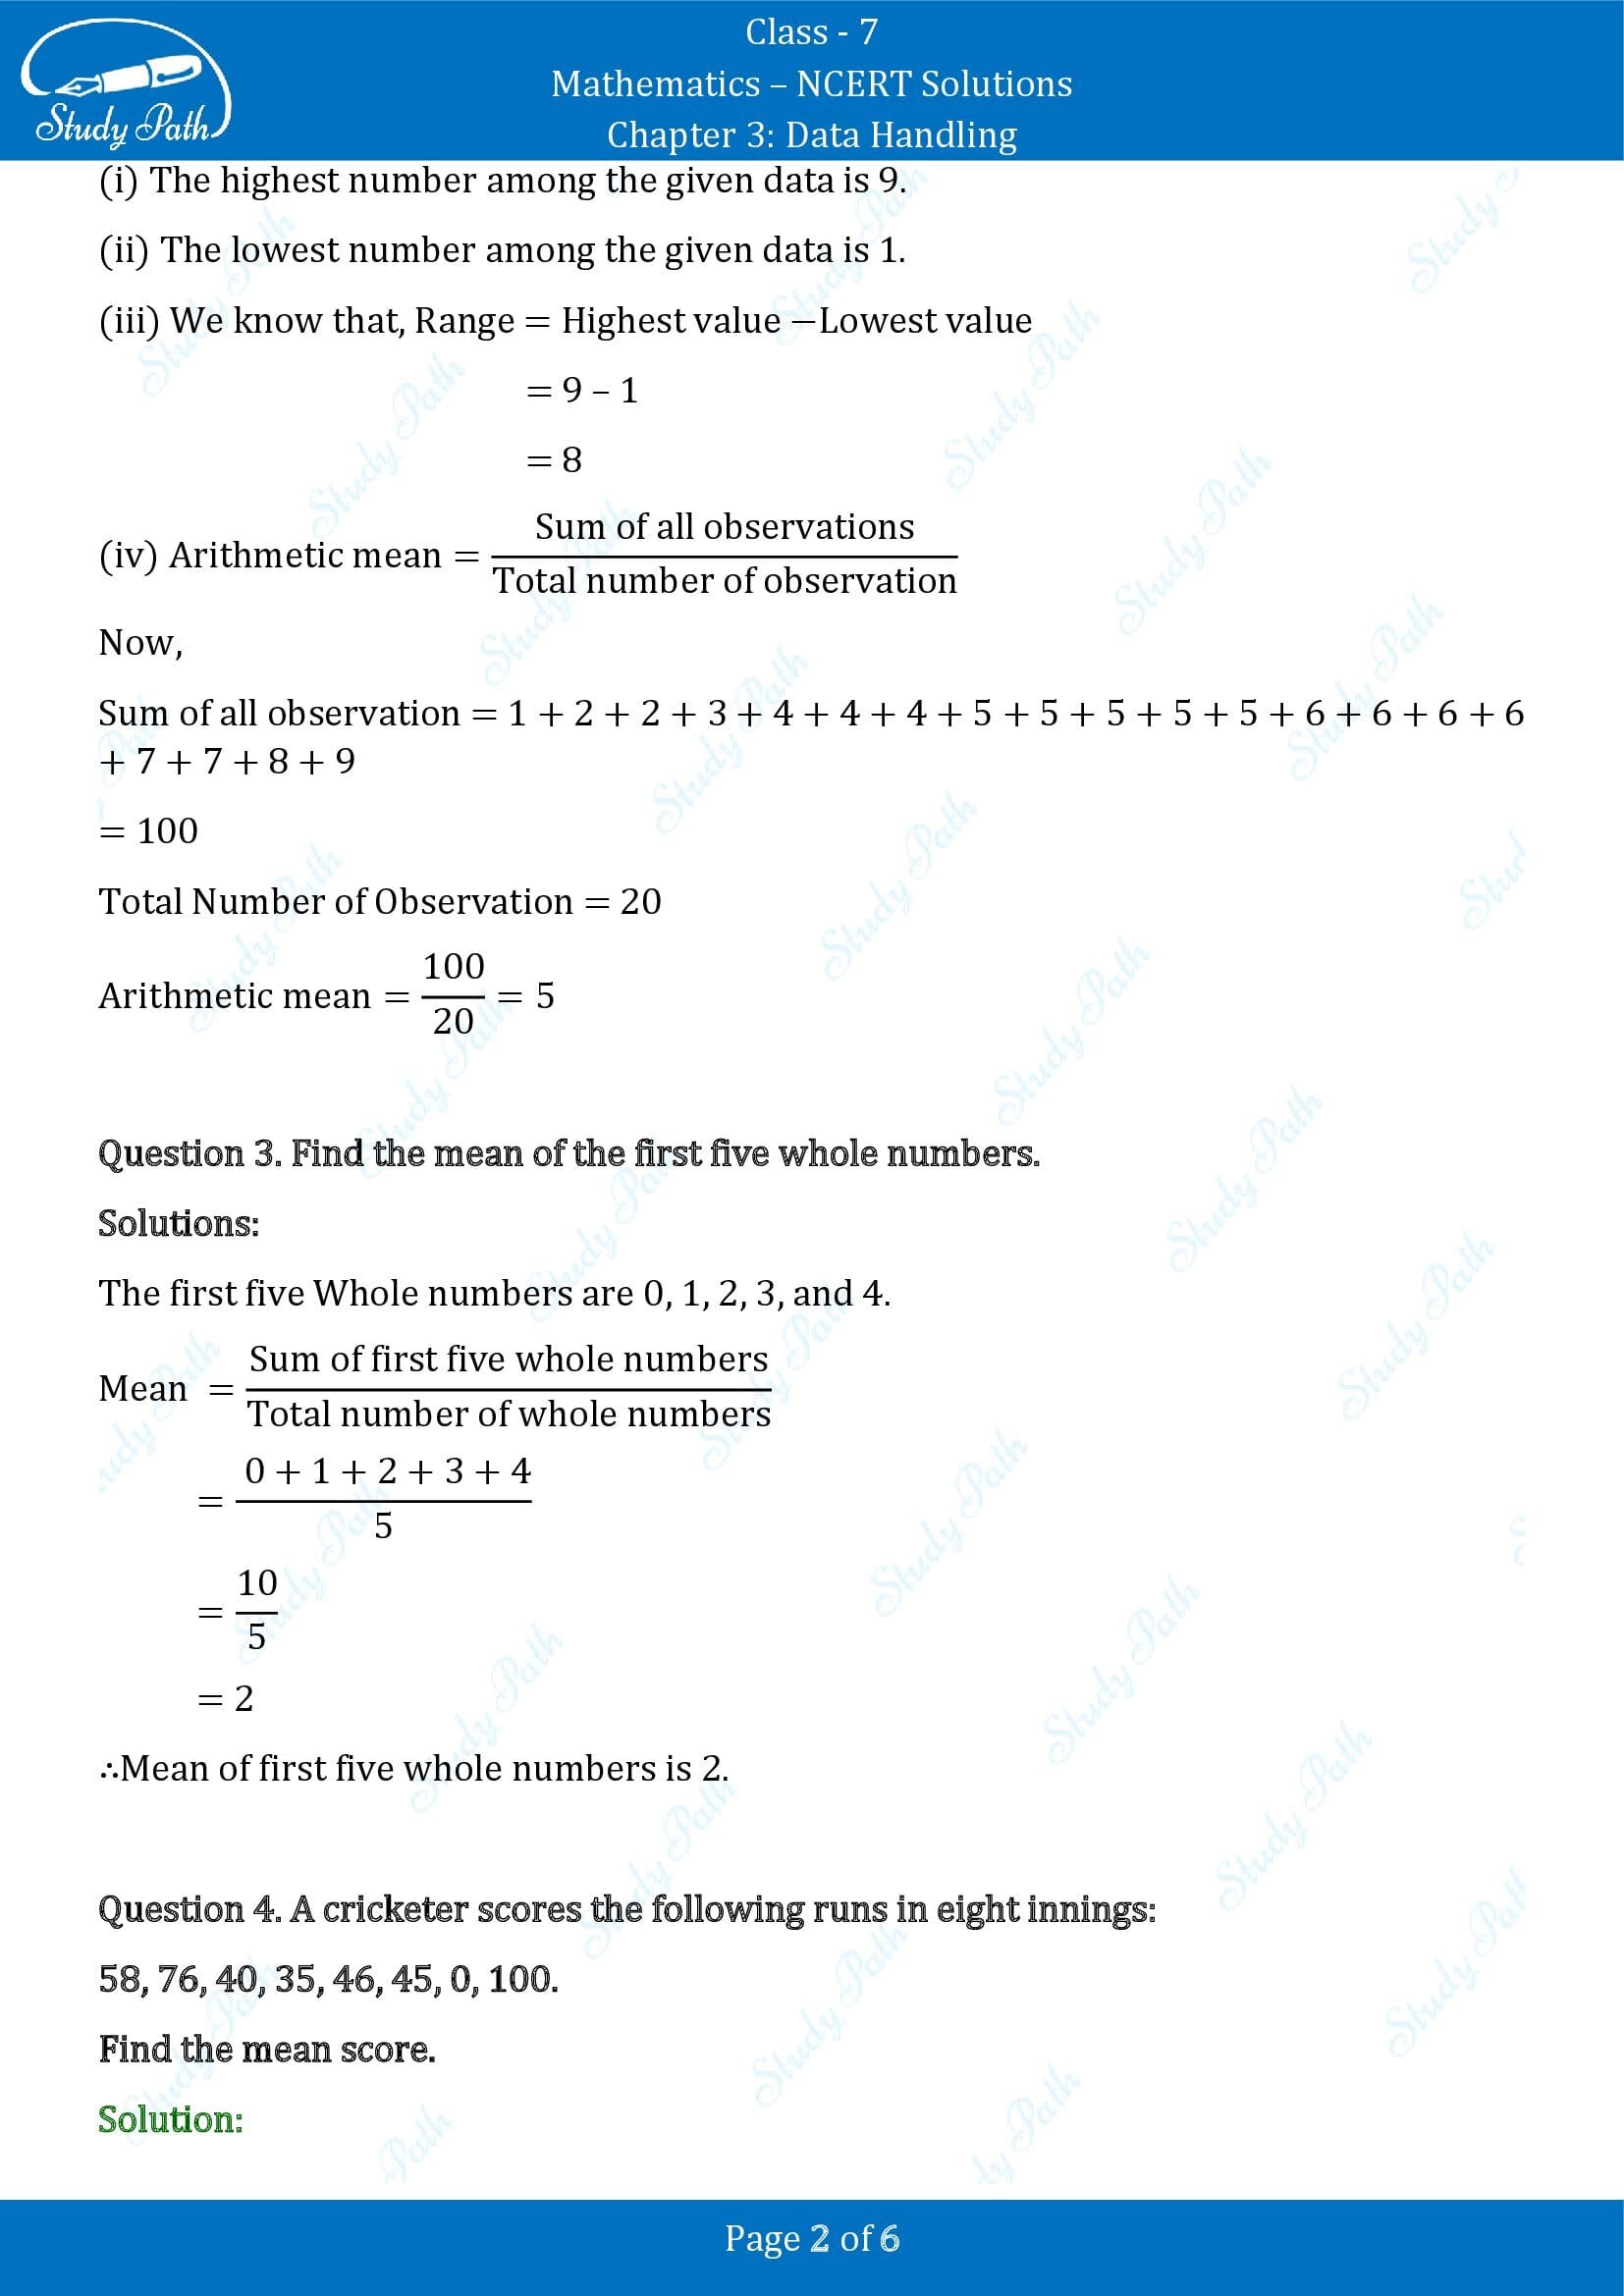 NCERT Solutions for Class 7 Maths Chapter 3 Data Handling Exercise 3.1 00002